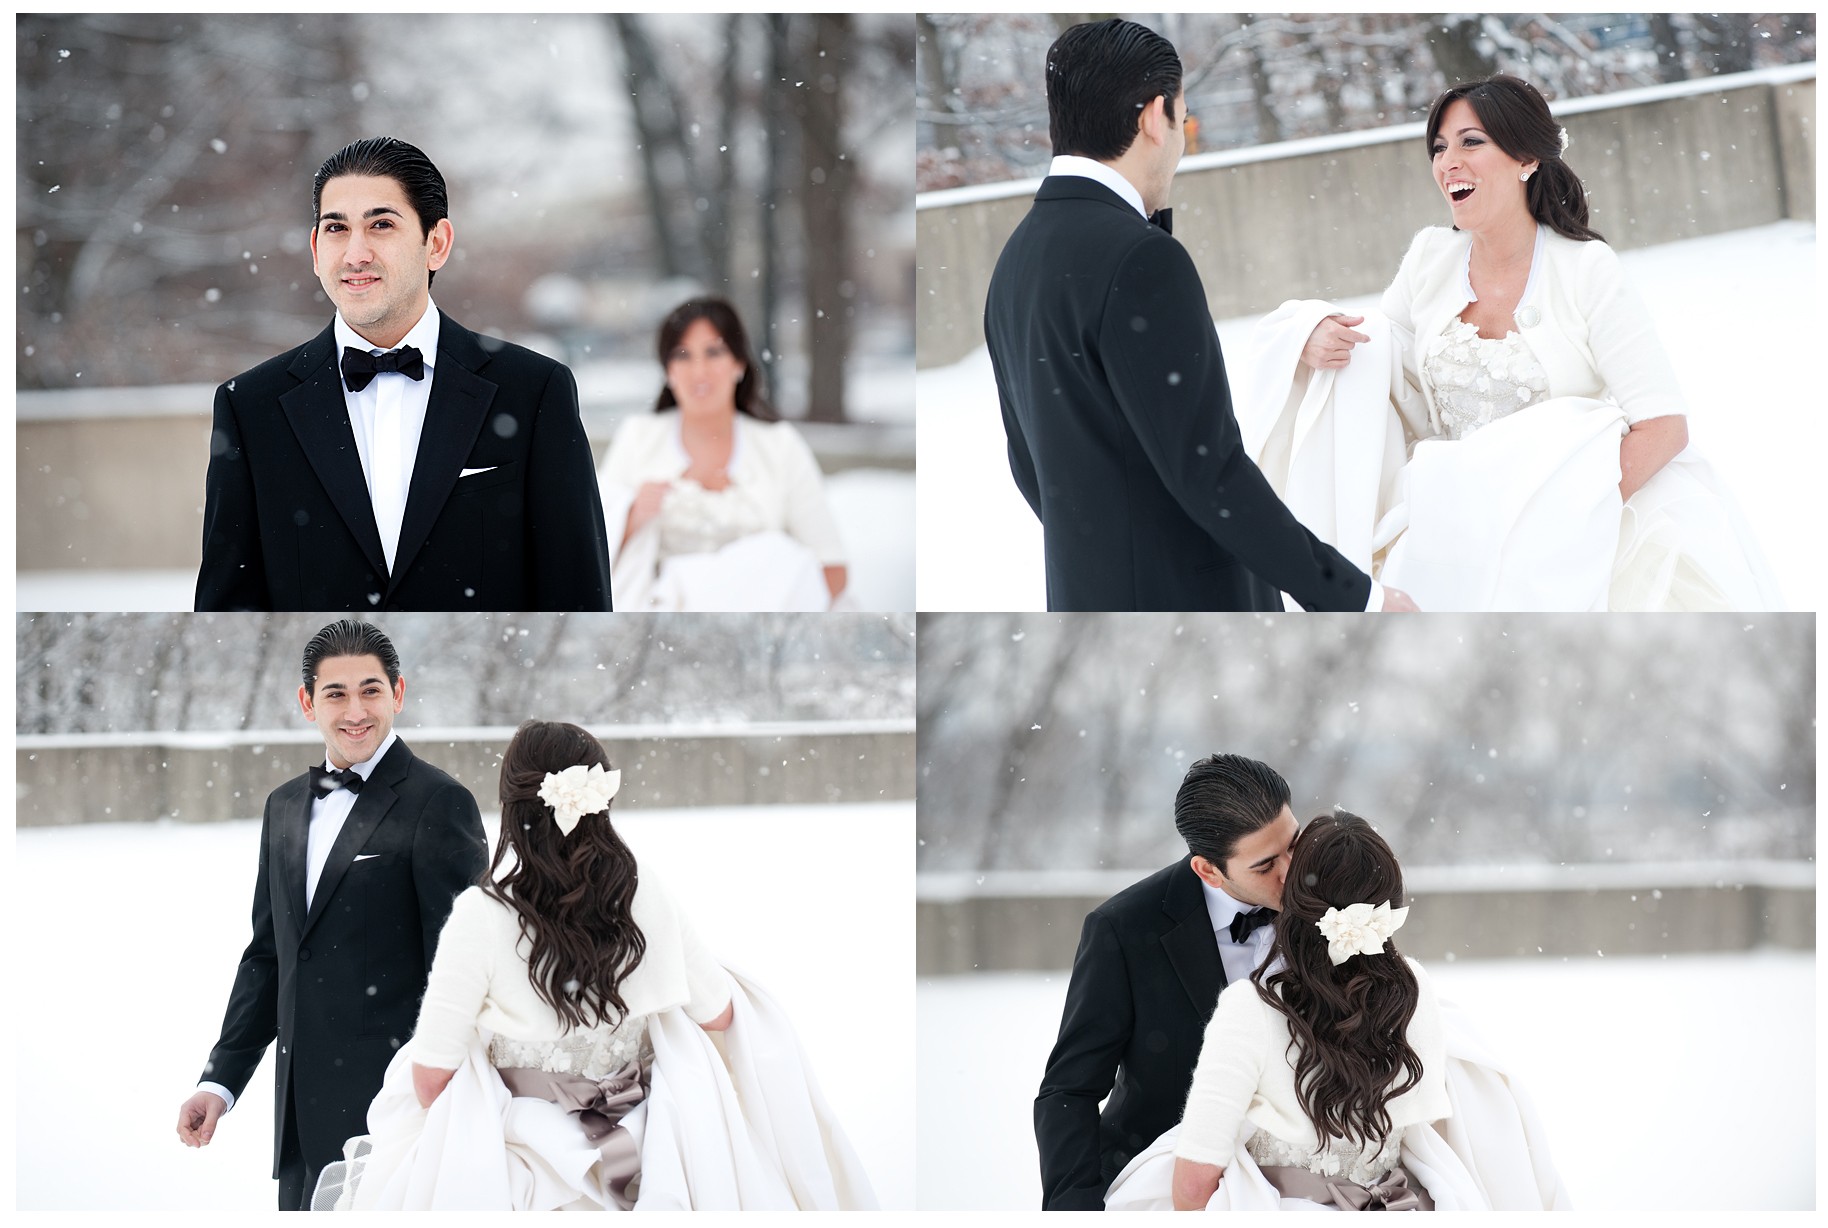 winter wedding photos tyler boye photography 5